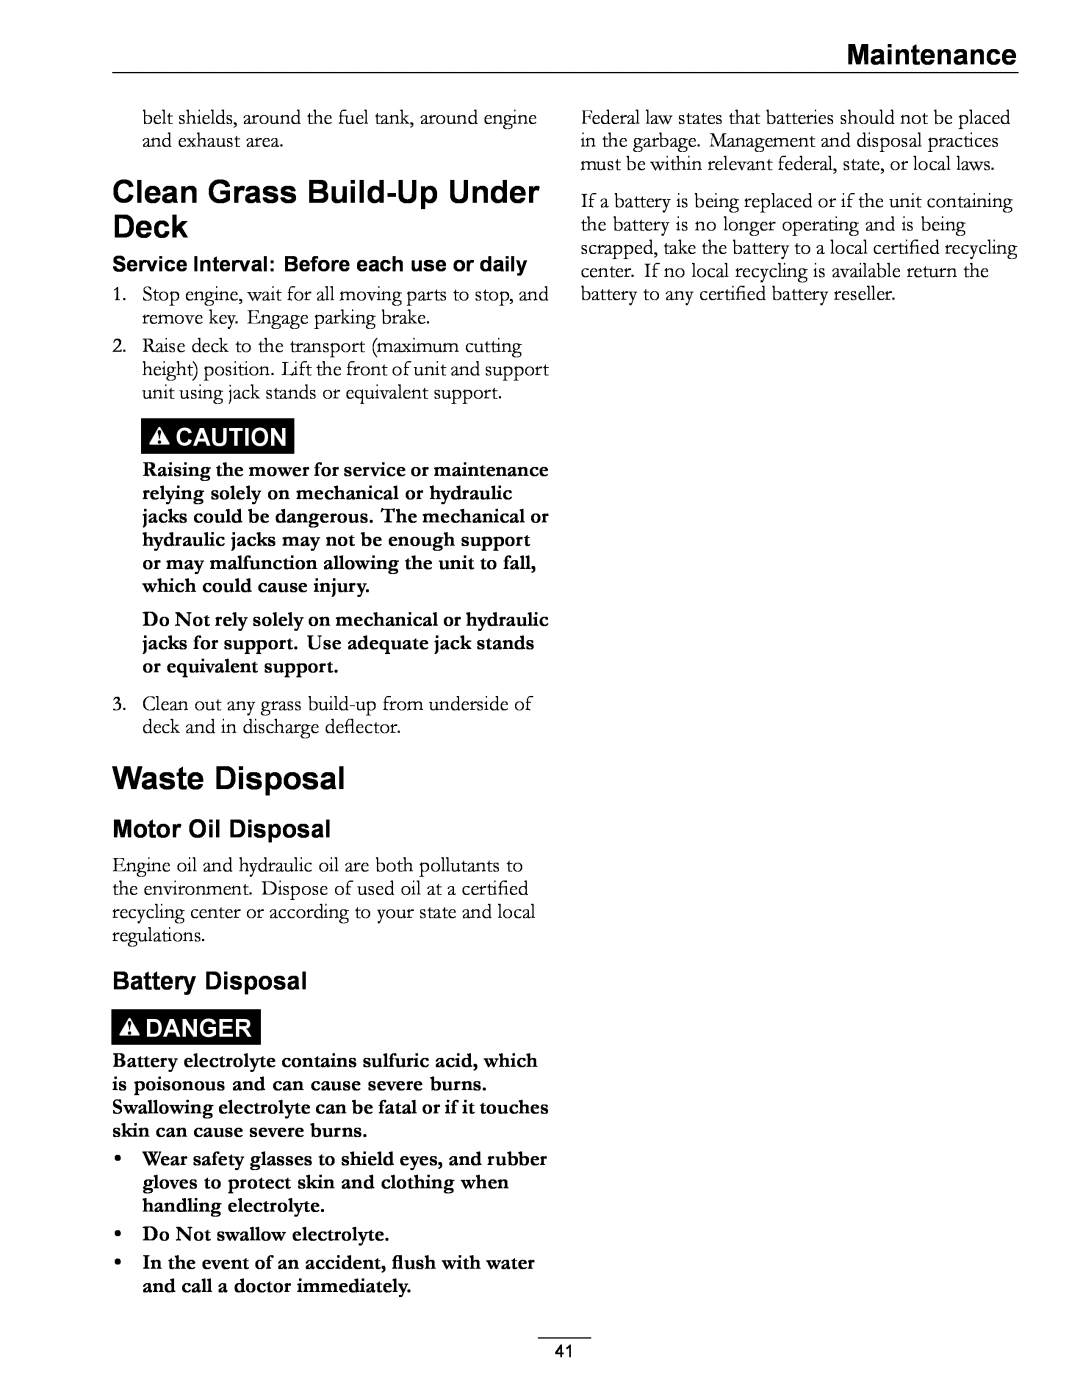 Exmark 920 manual Clean Grass Build-UpUnder Deck, Waste Disposal, Motor Oil Disposal, Battery Disposal, Maintenance, Danger 